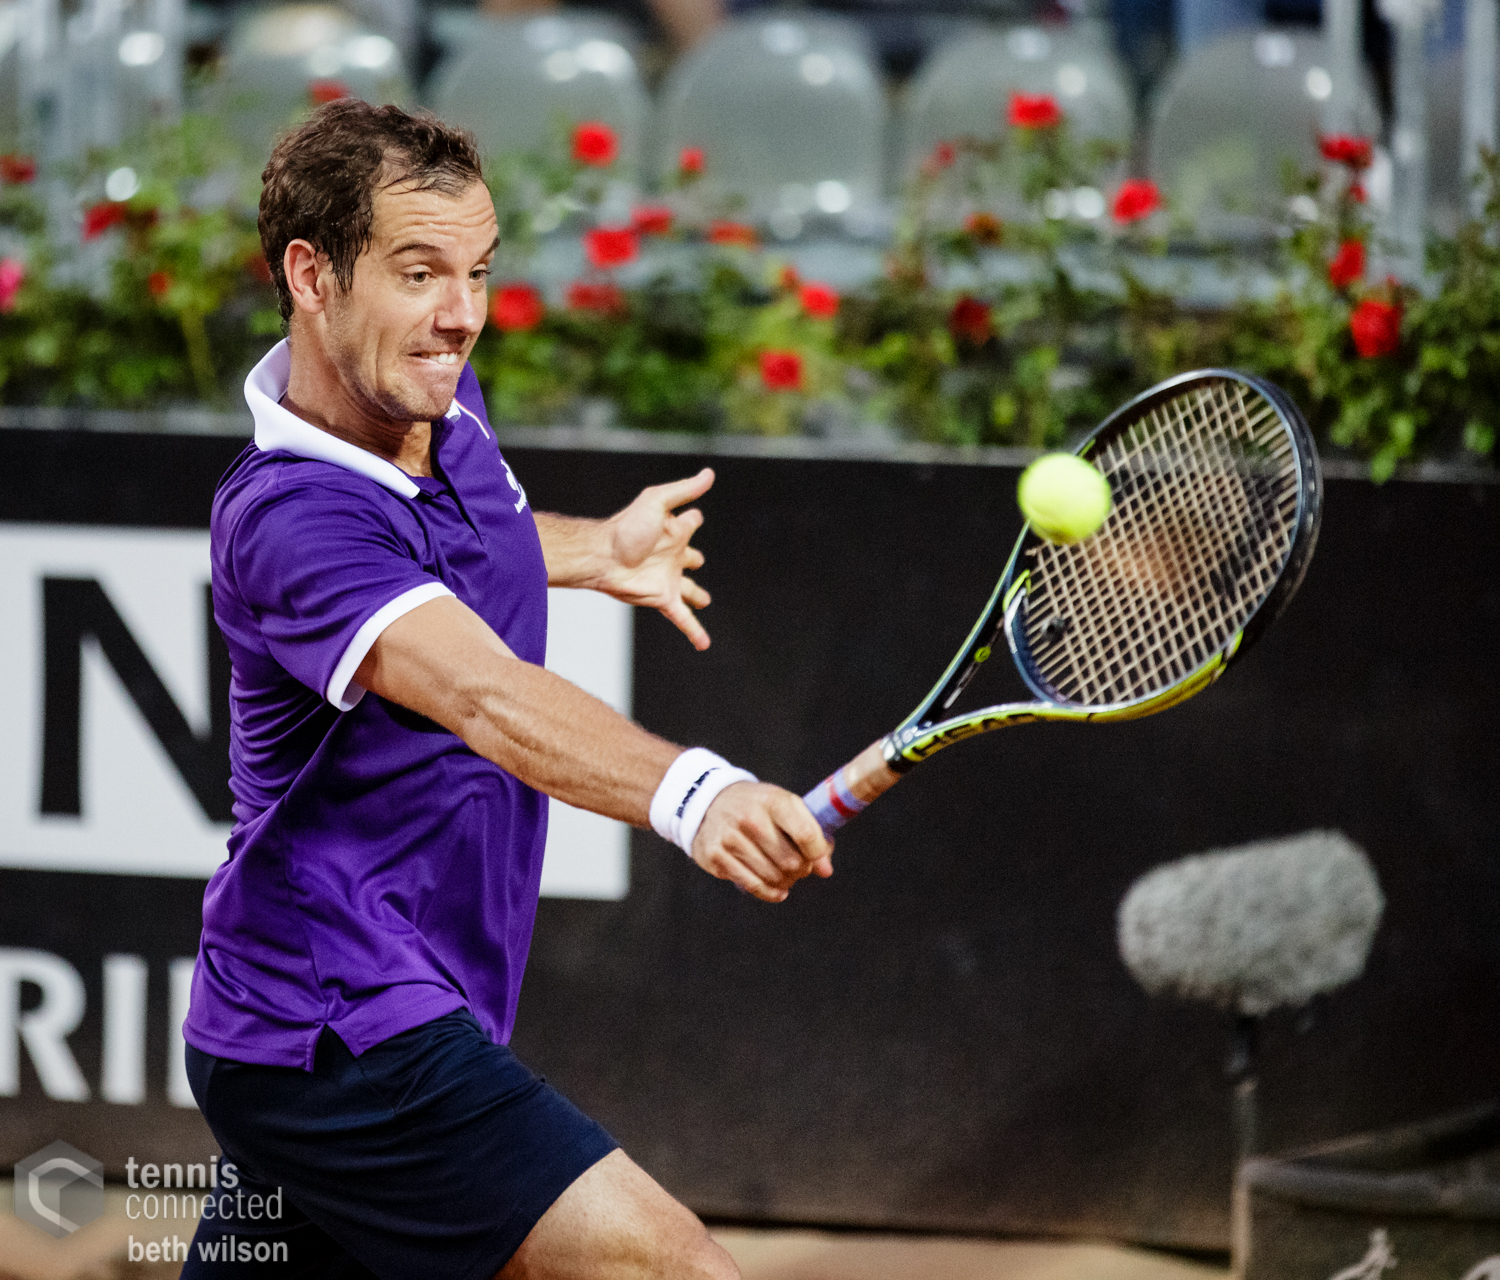 Rome: 2nd round match between David Ferrer and Richard Gasquet. Ferrer won 6-1 7-6(0).